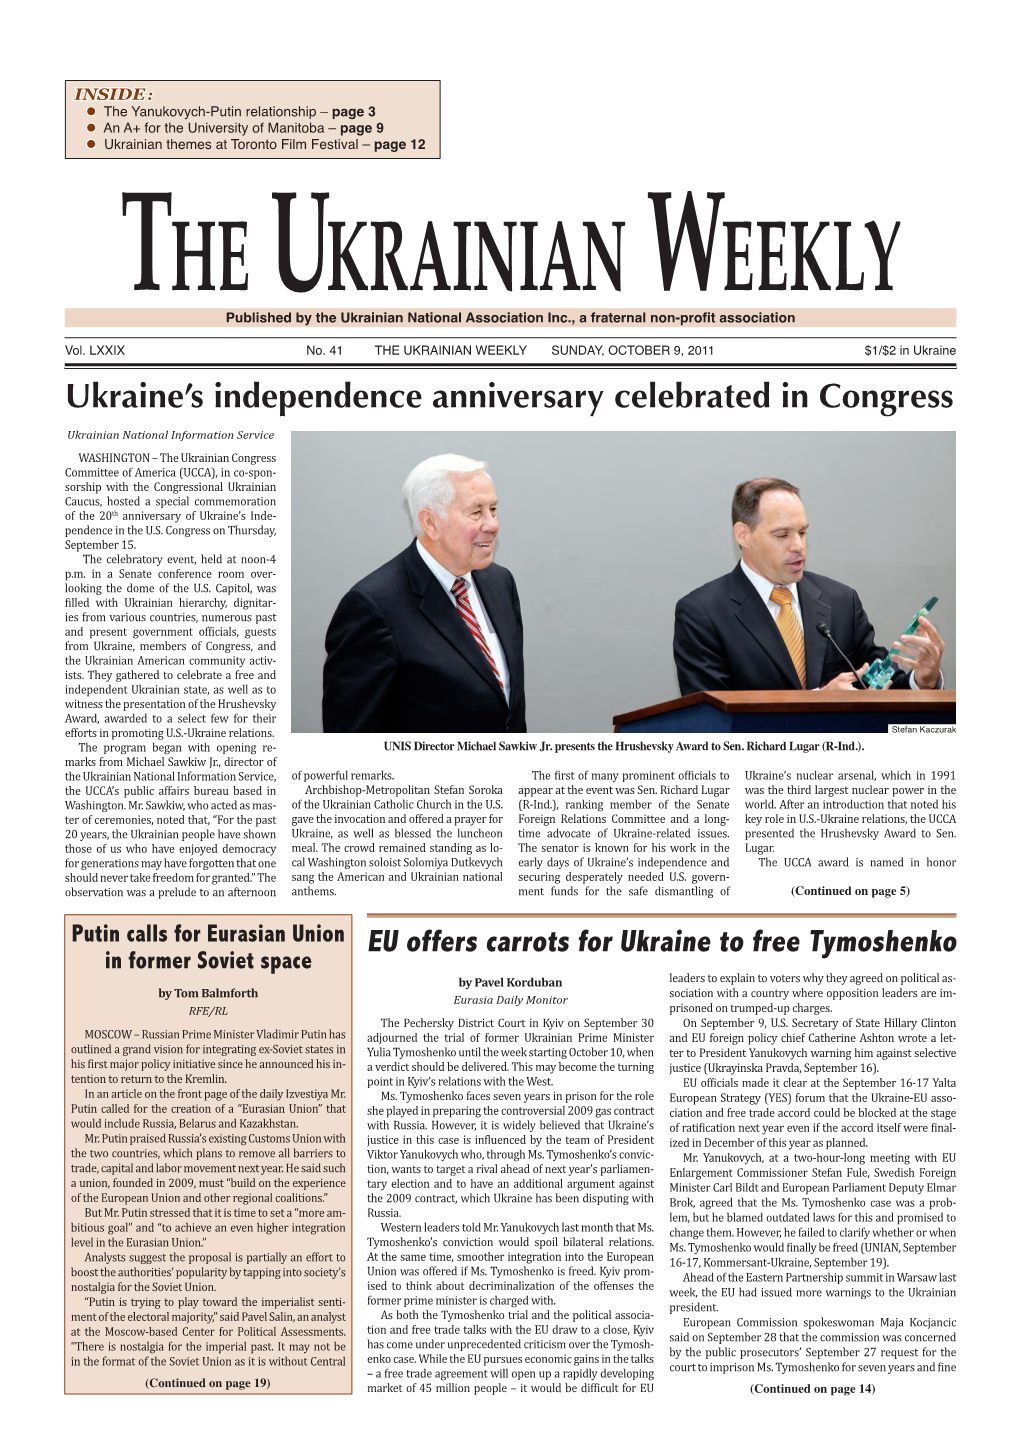 The Ukrainian Weekly 2011, No.41